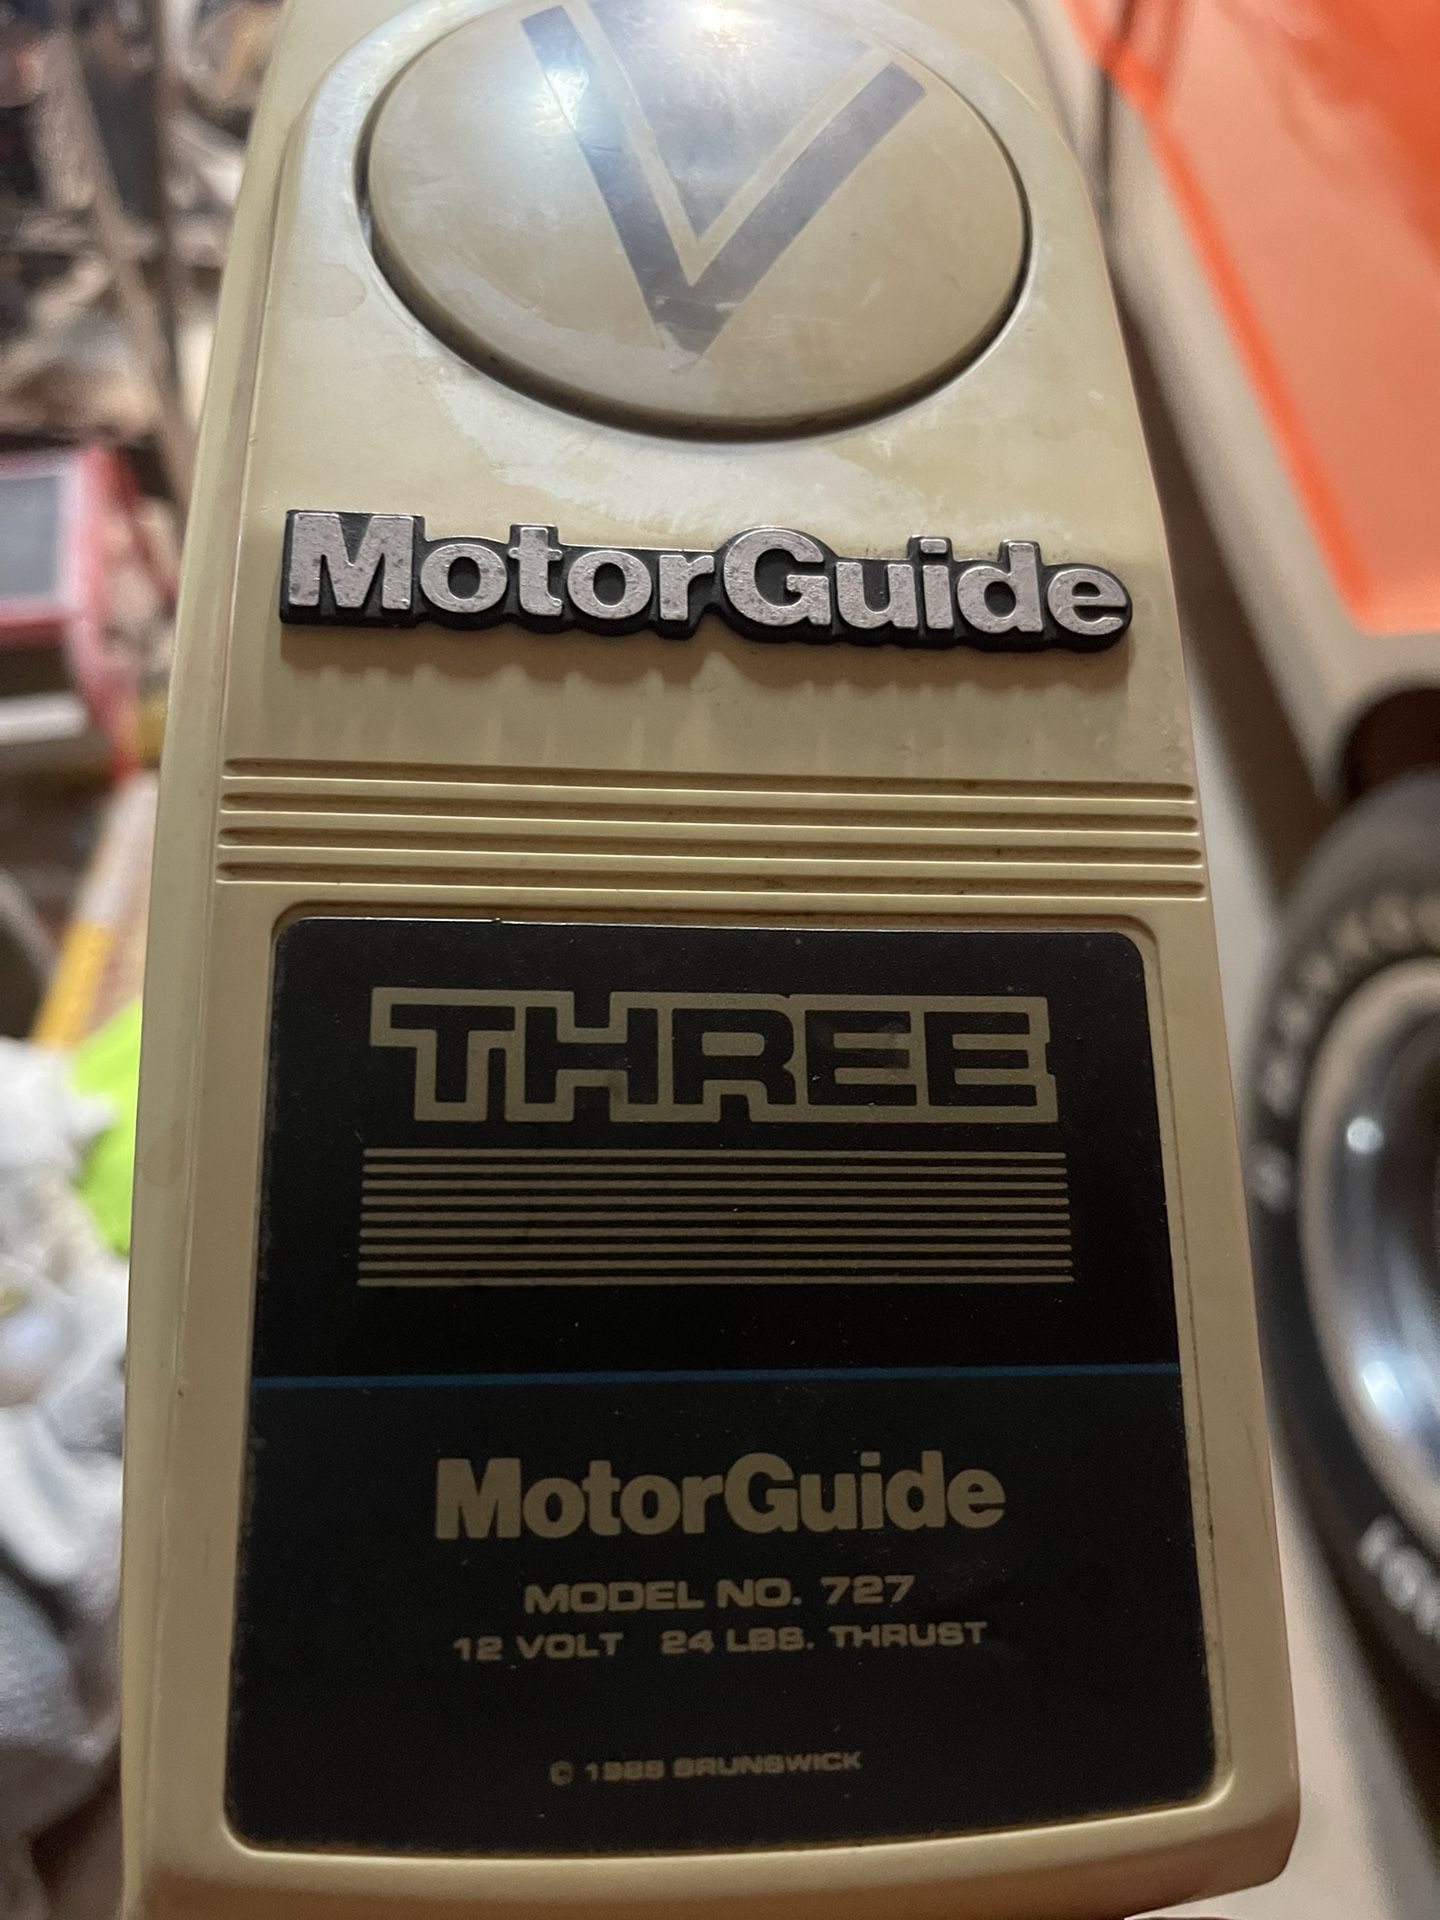 Motor Guide Trolling Motor 